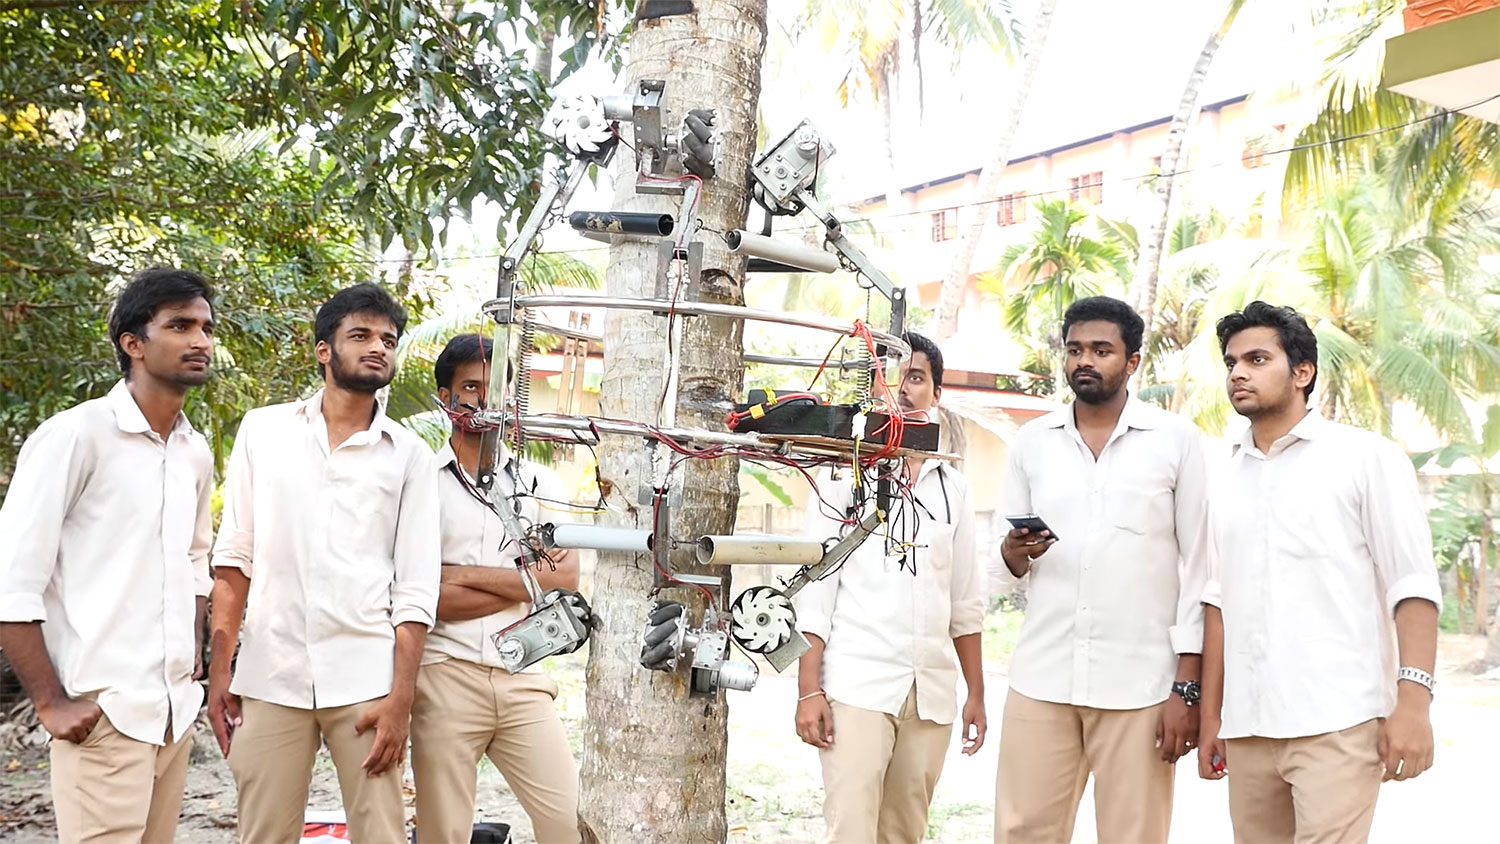 Amaran, a novel robotic coconut tree climber and harvester